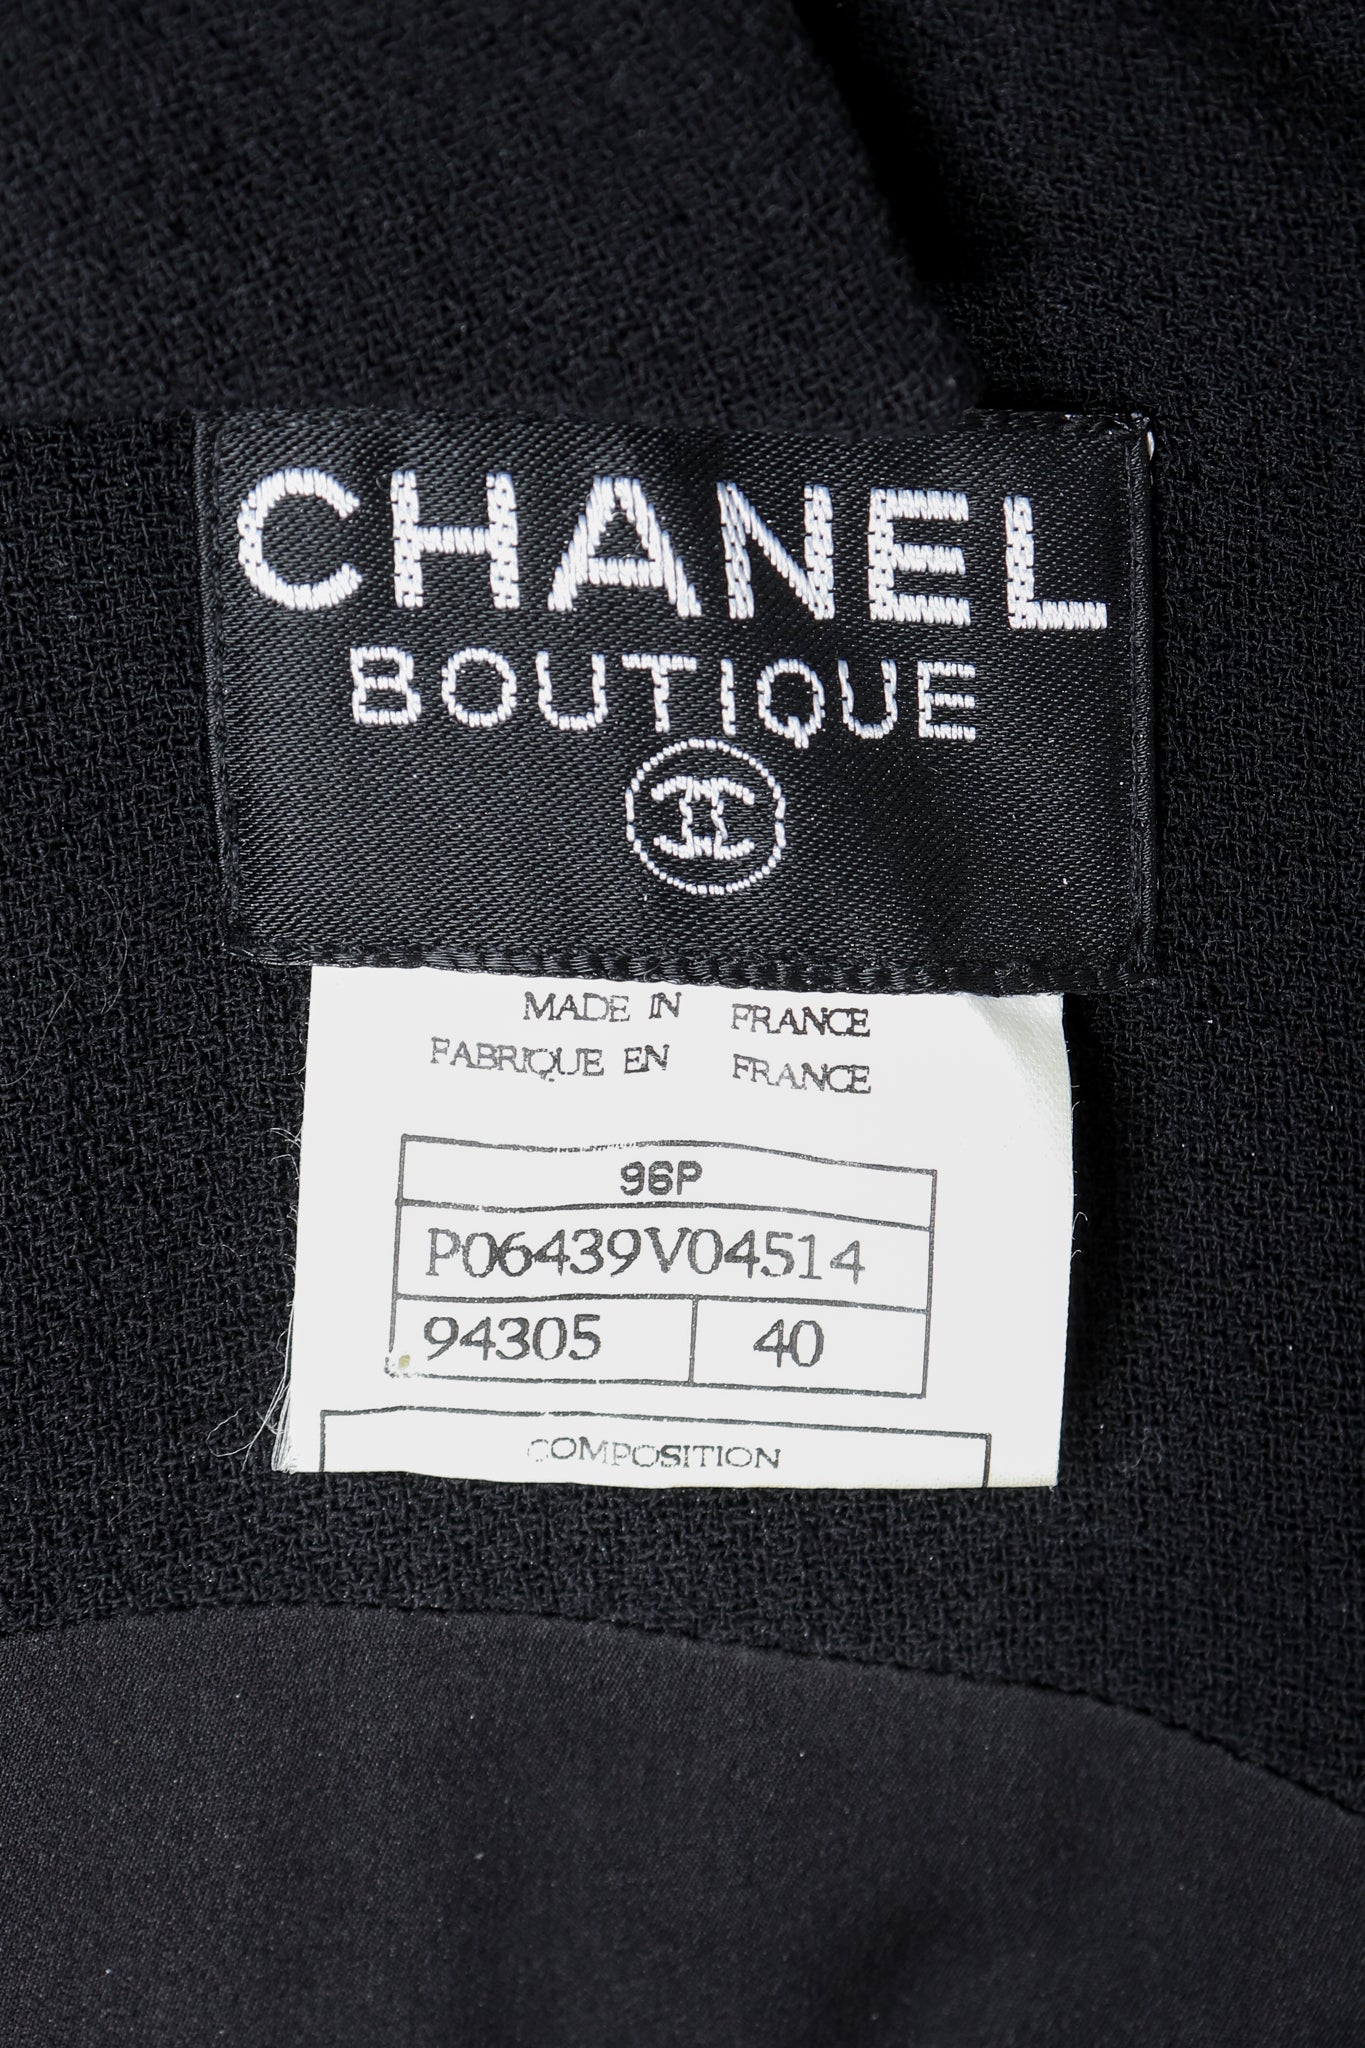 Vintage Chanel Label on black Fabric